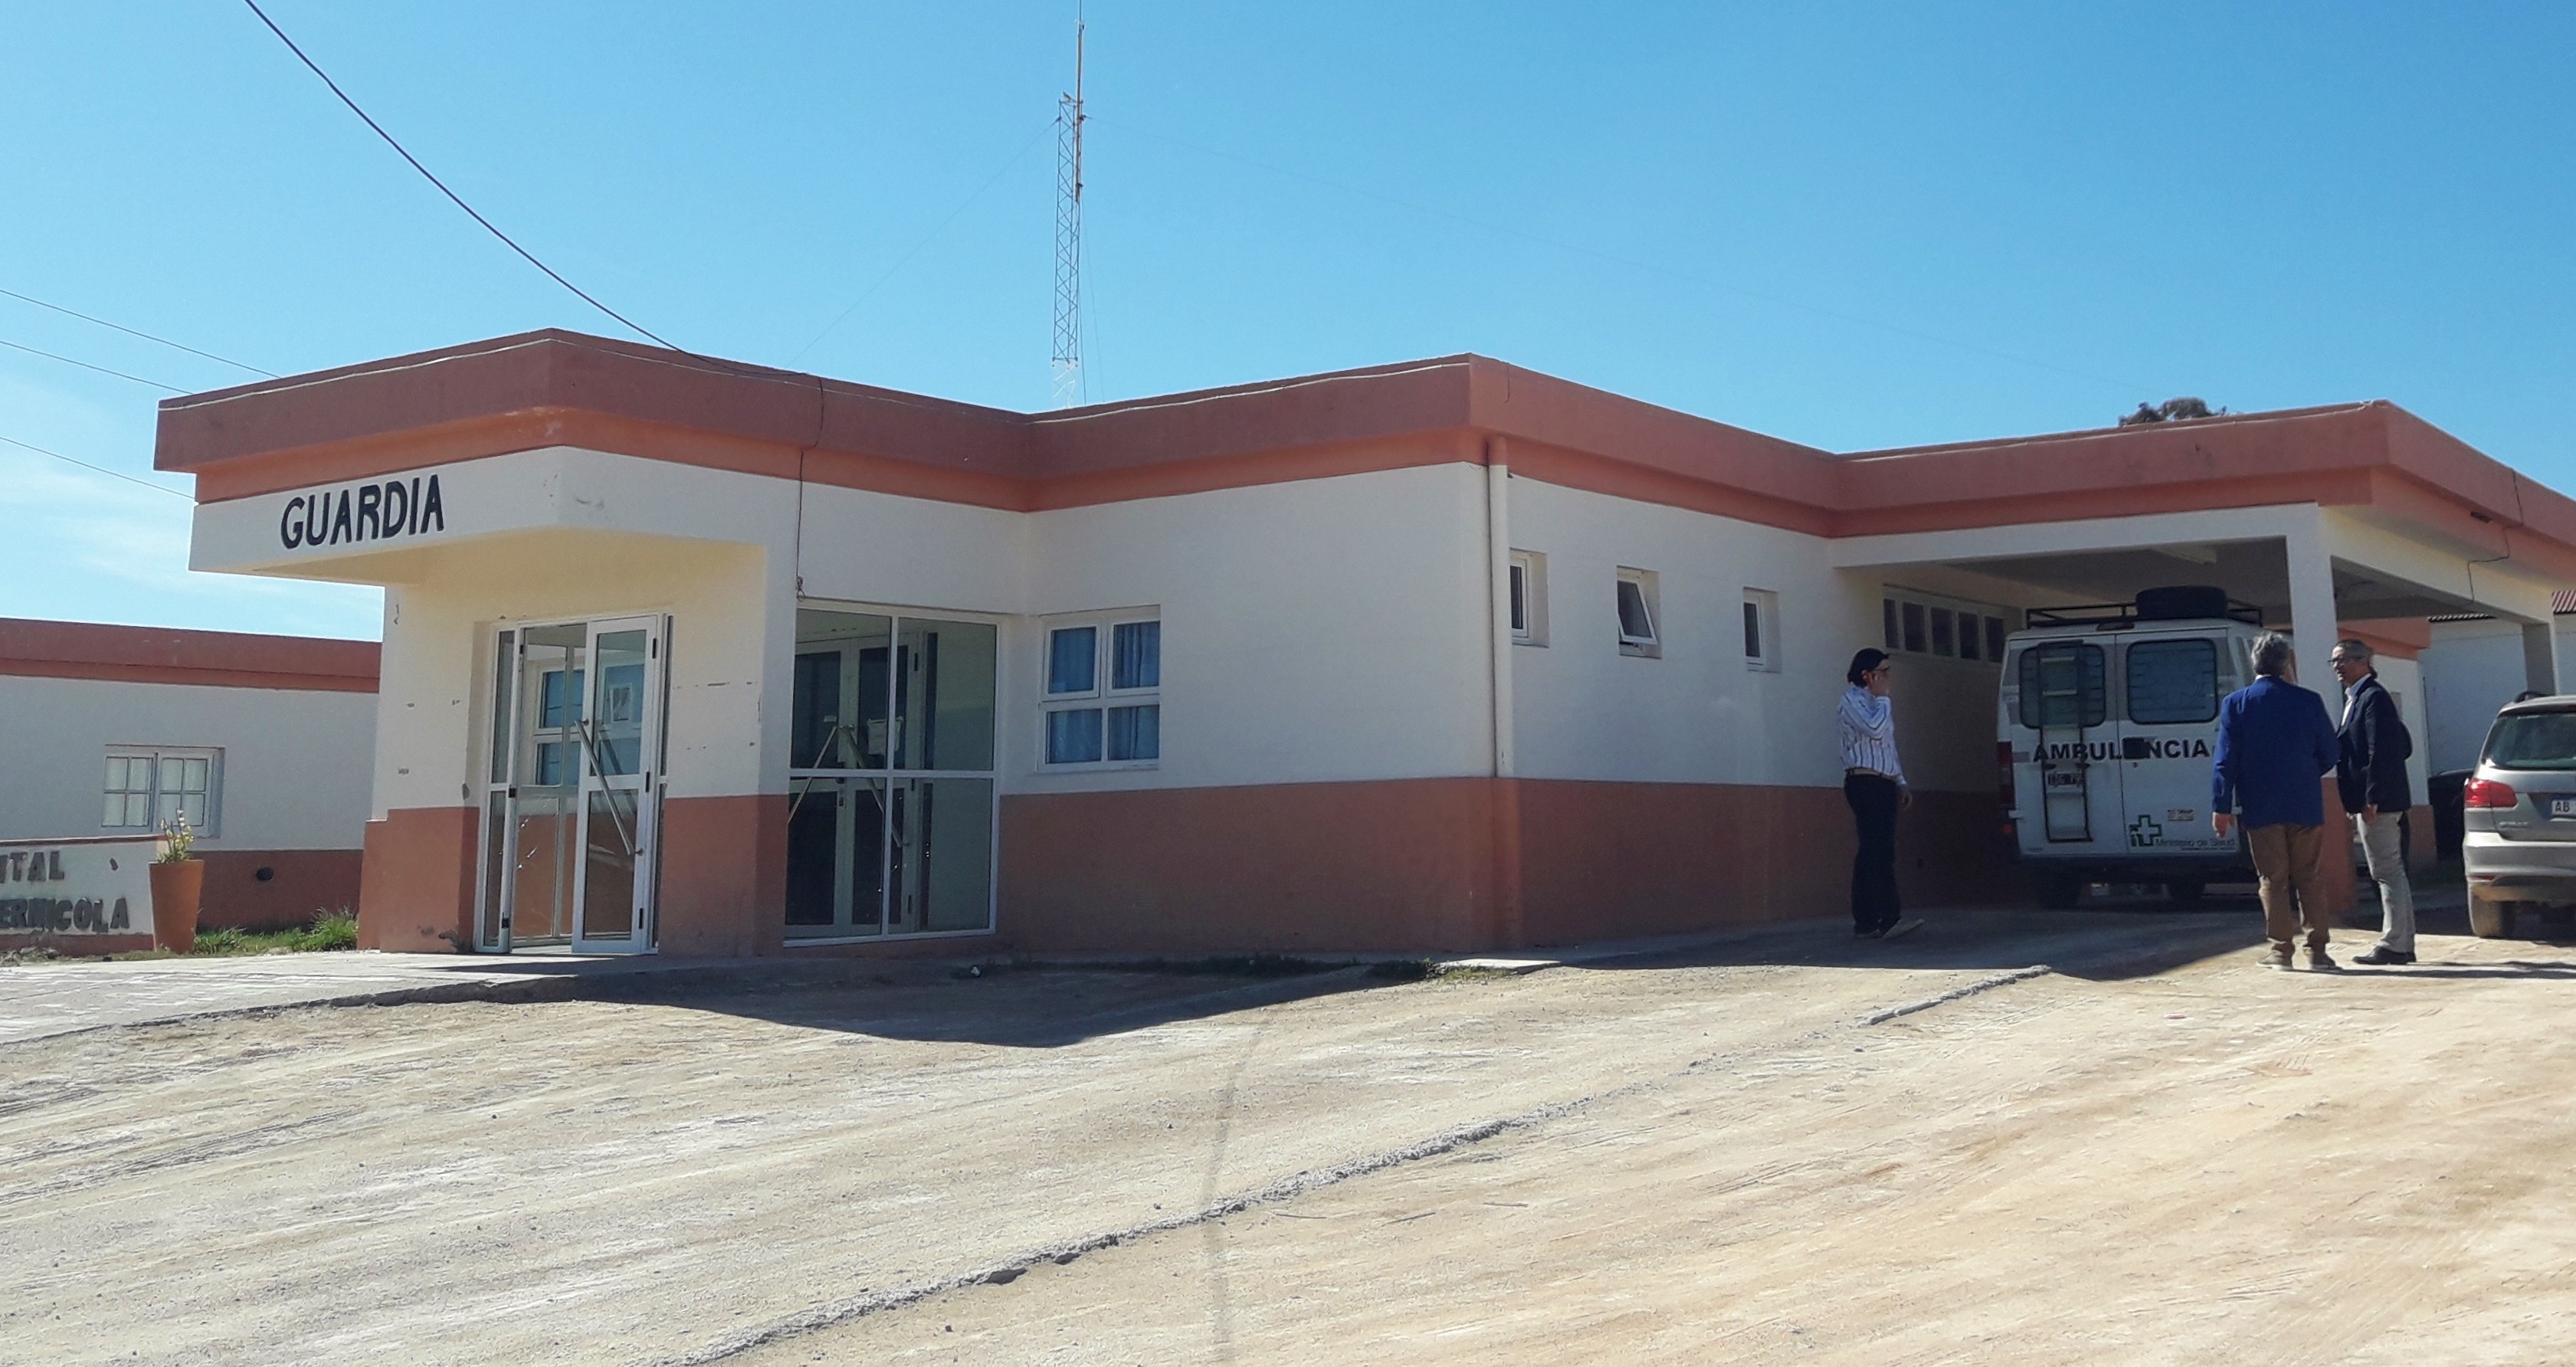 Al hospital "Dr. Raúl Fernícola" de Valcheta tiene una amplia zona de cobertura. (Foto de archivo)